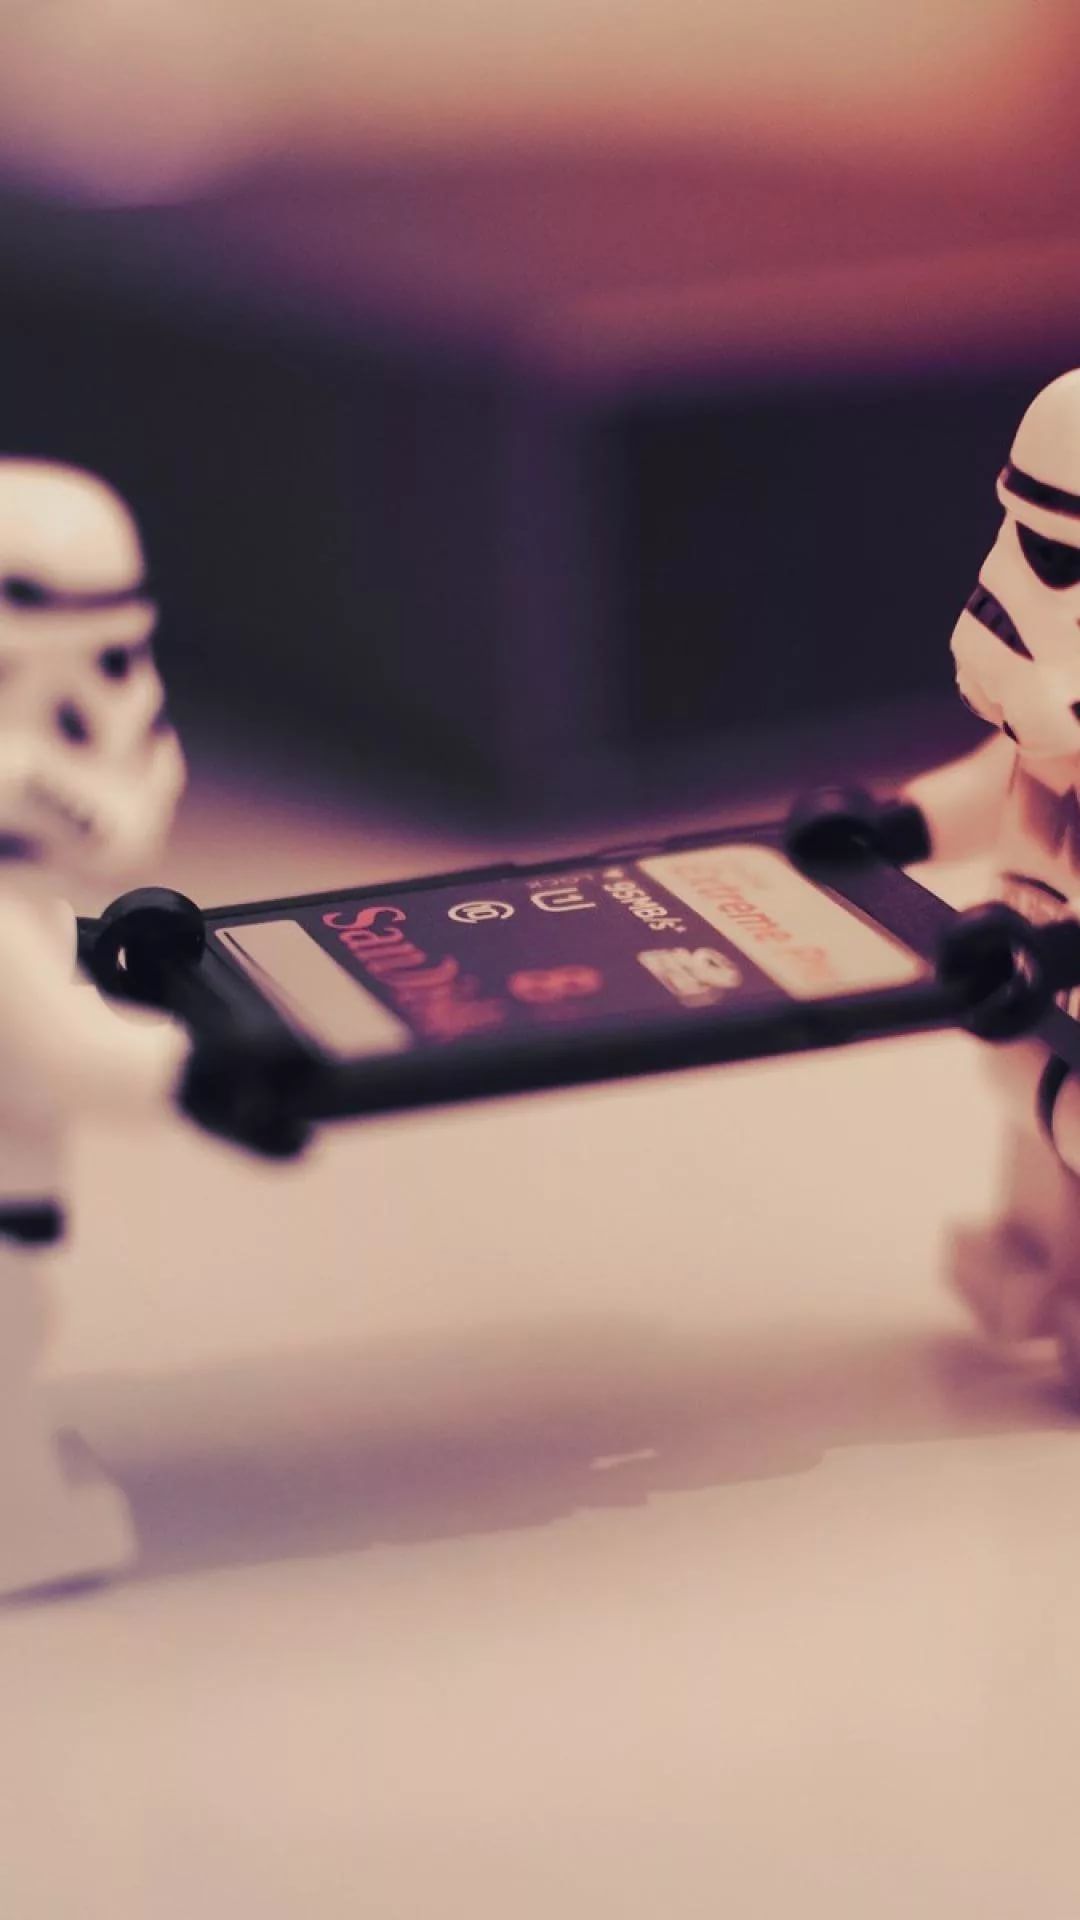 Lego Star Wars phone background